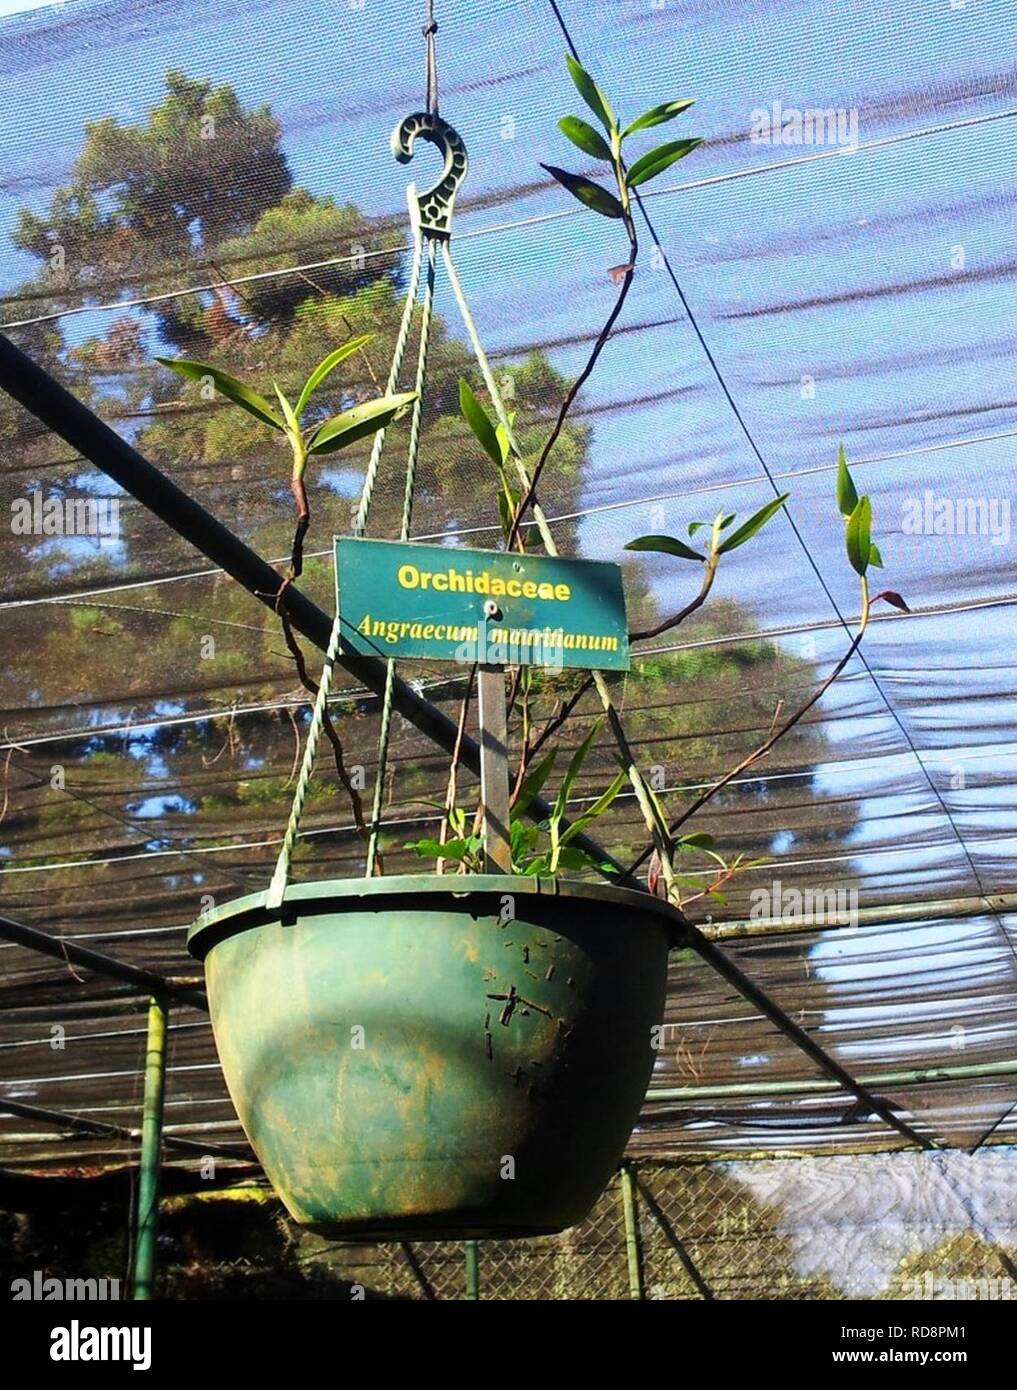 Angraecum mauritianum orchid - Monvert fernery Mauritius 3. Stock Photo